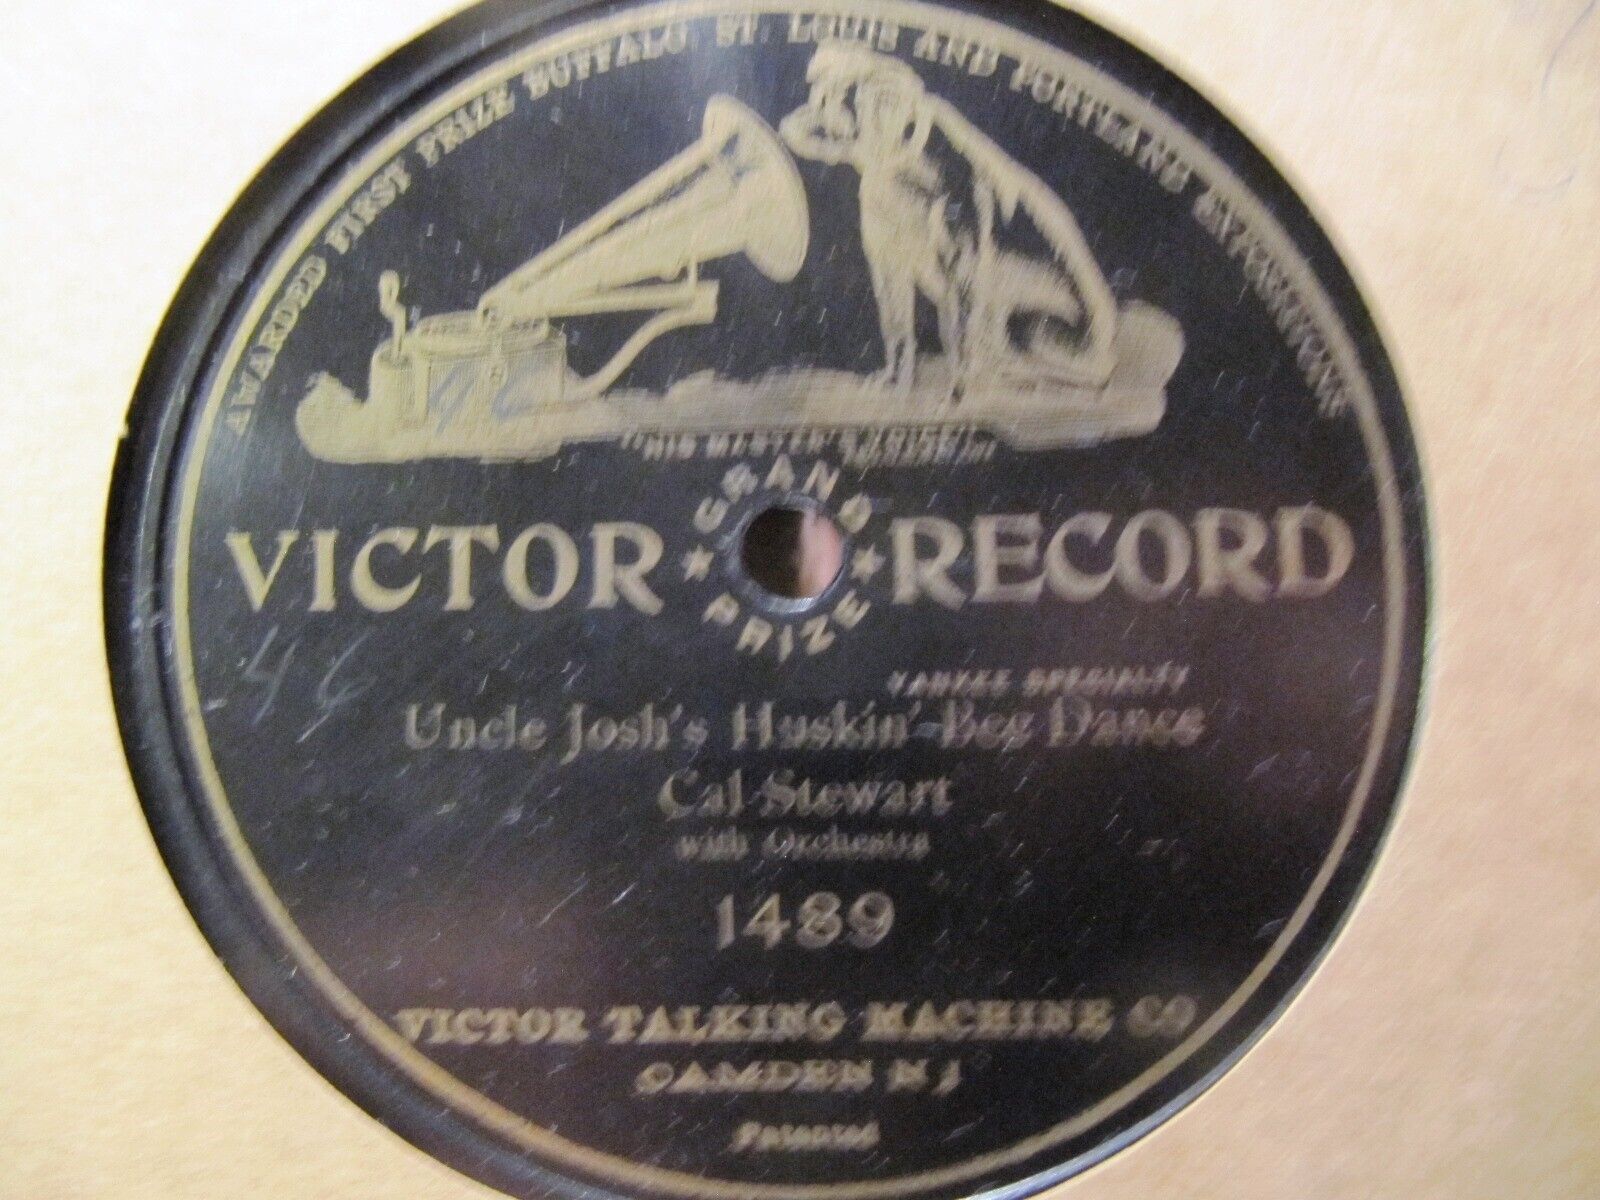 1907 1st Take UNCLE JOSH\'s Huskin Bee Dance Cal Stewart Victor GRAND PRIZE 1489,